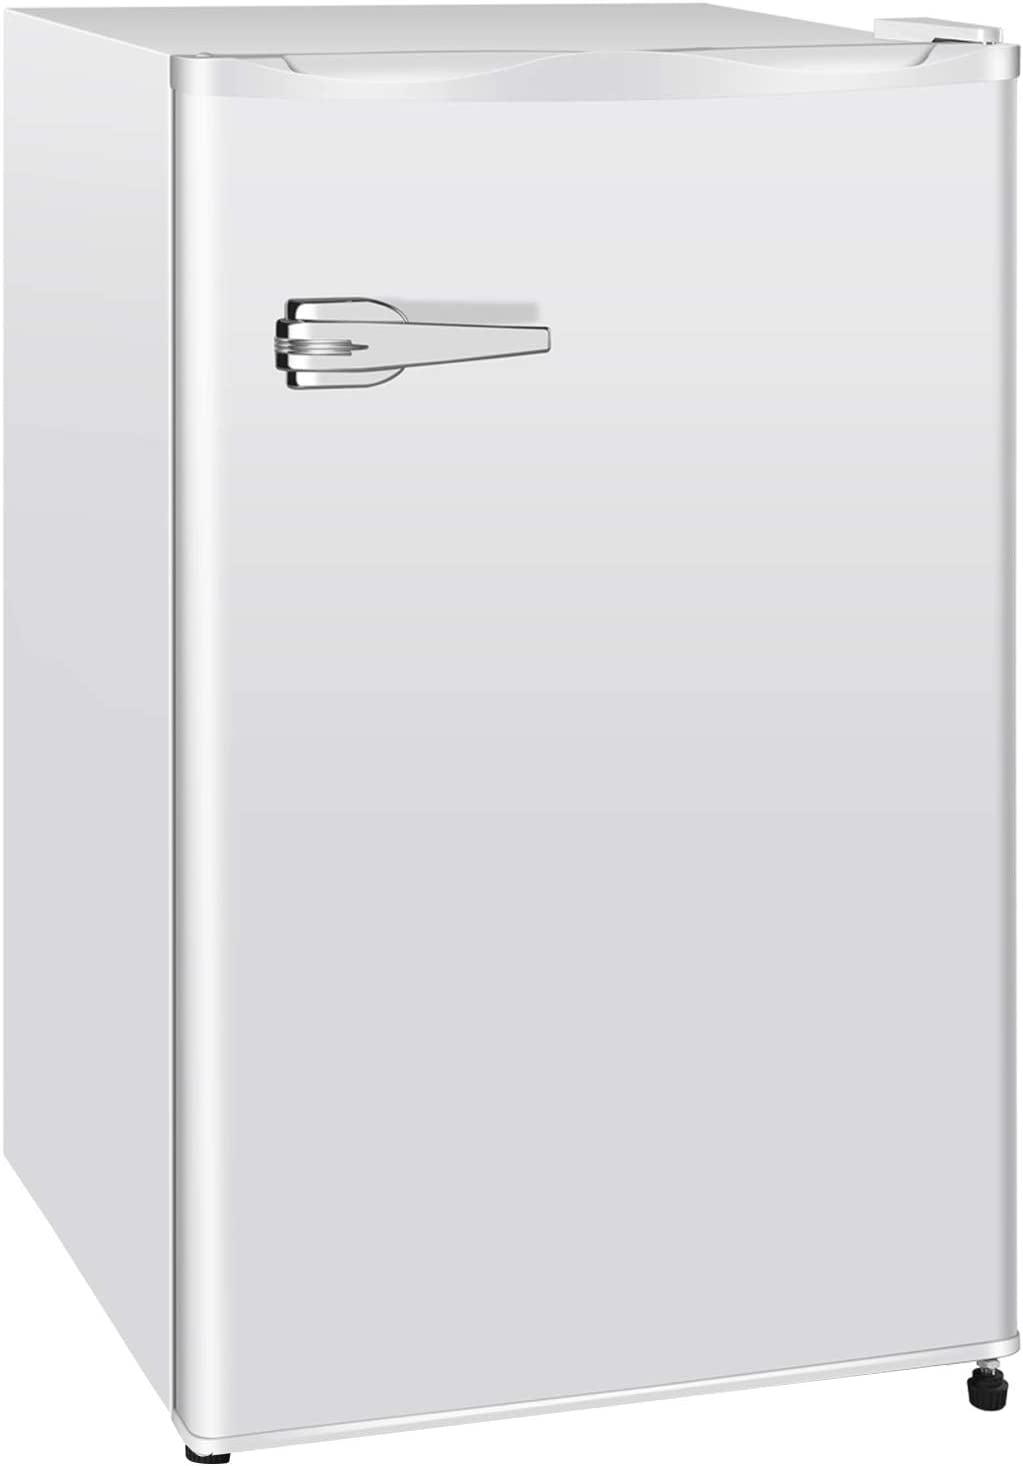 Havato Upright Compact Freezer 2.3 Cu.ft, Freestanding Mini